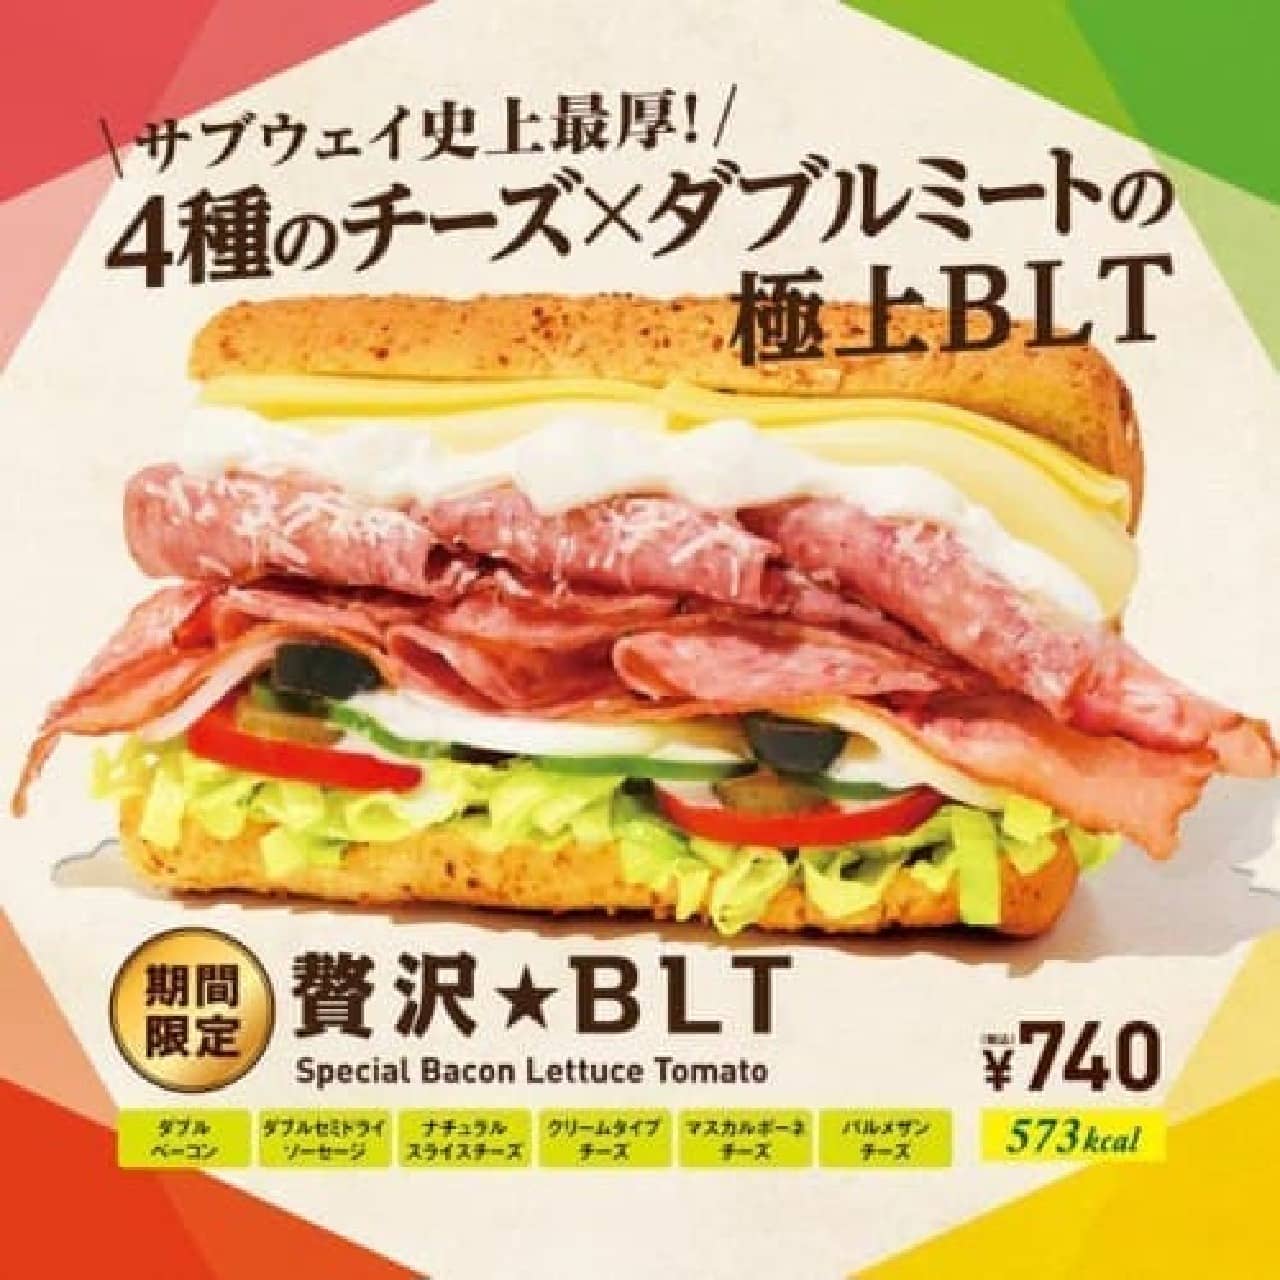 Subway "Luxury ★ BLT"